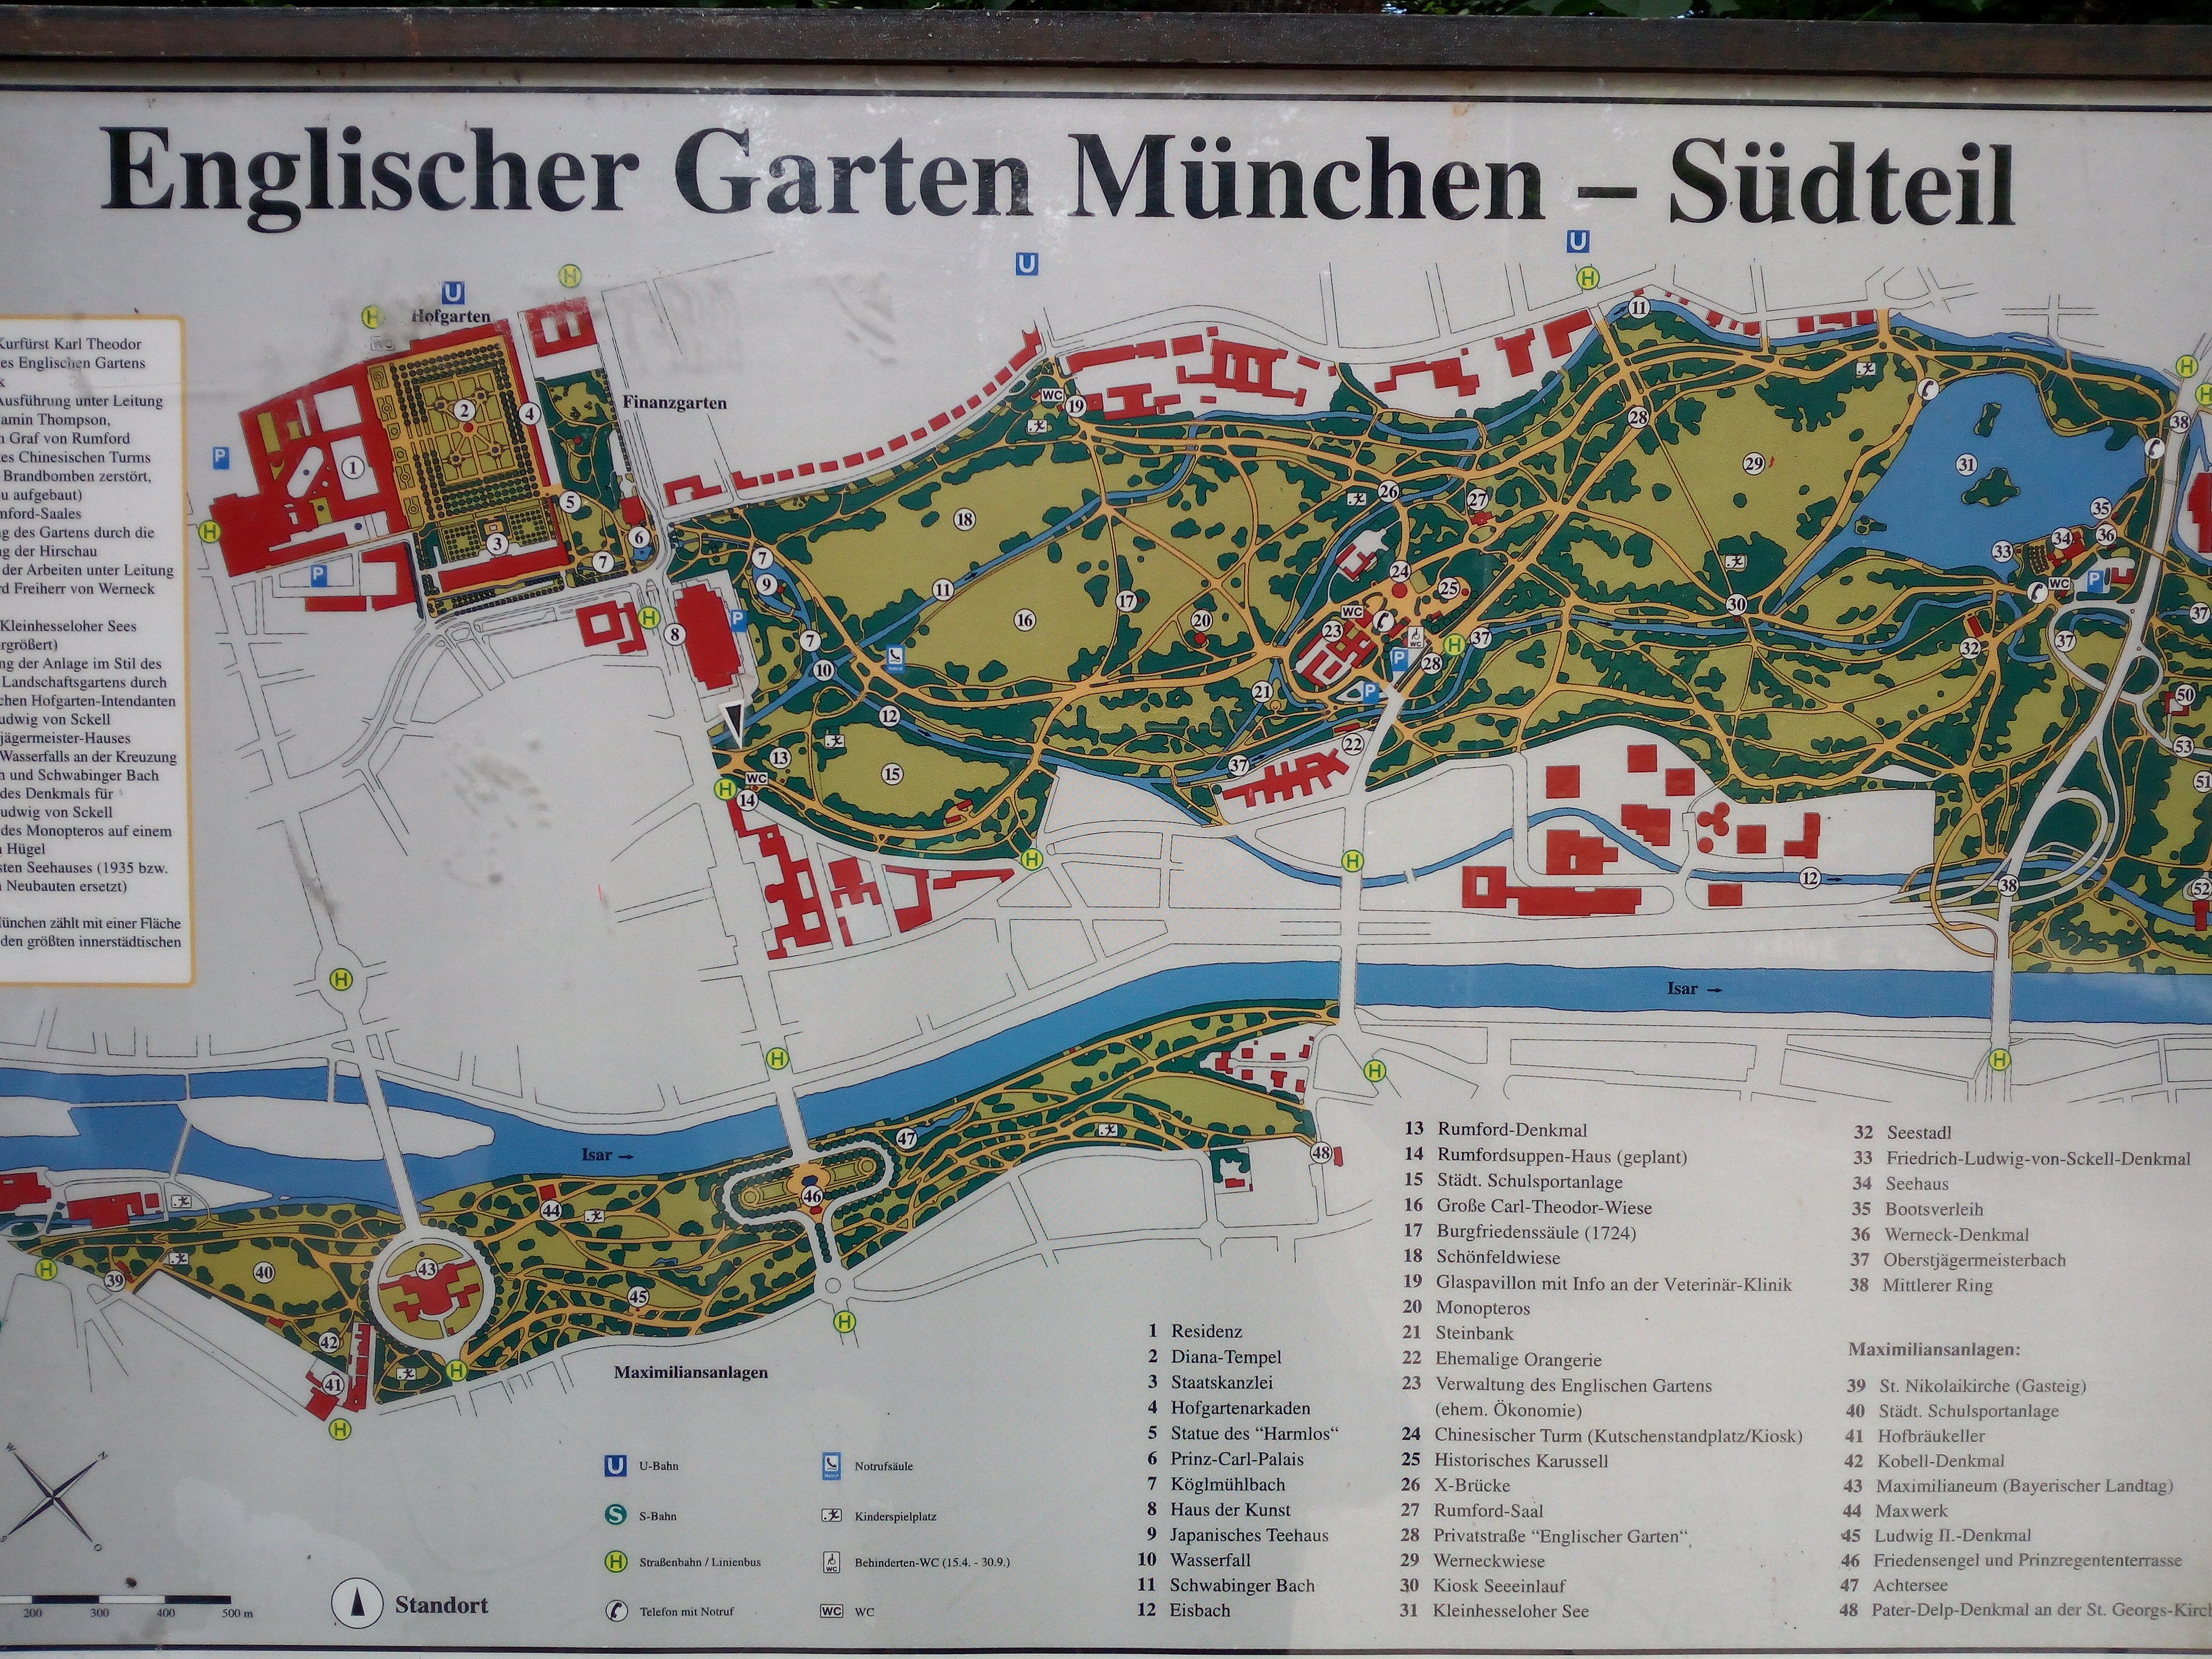 Map of the Englischer Garten in Munich